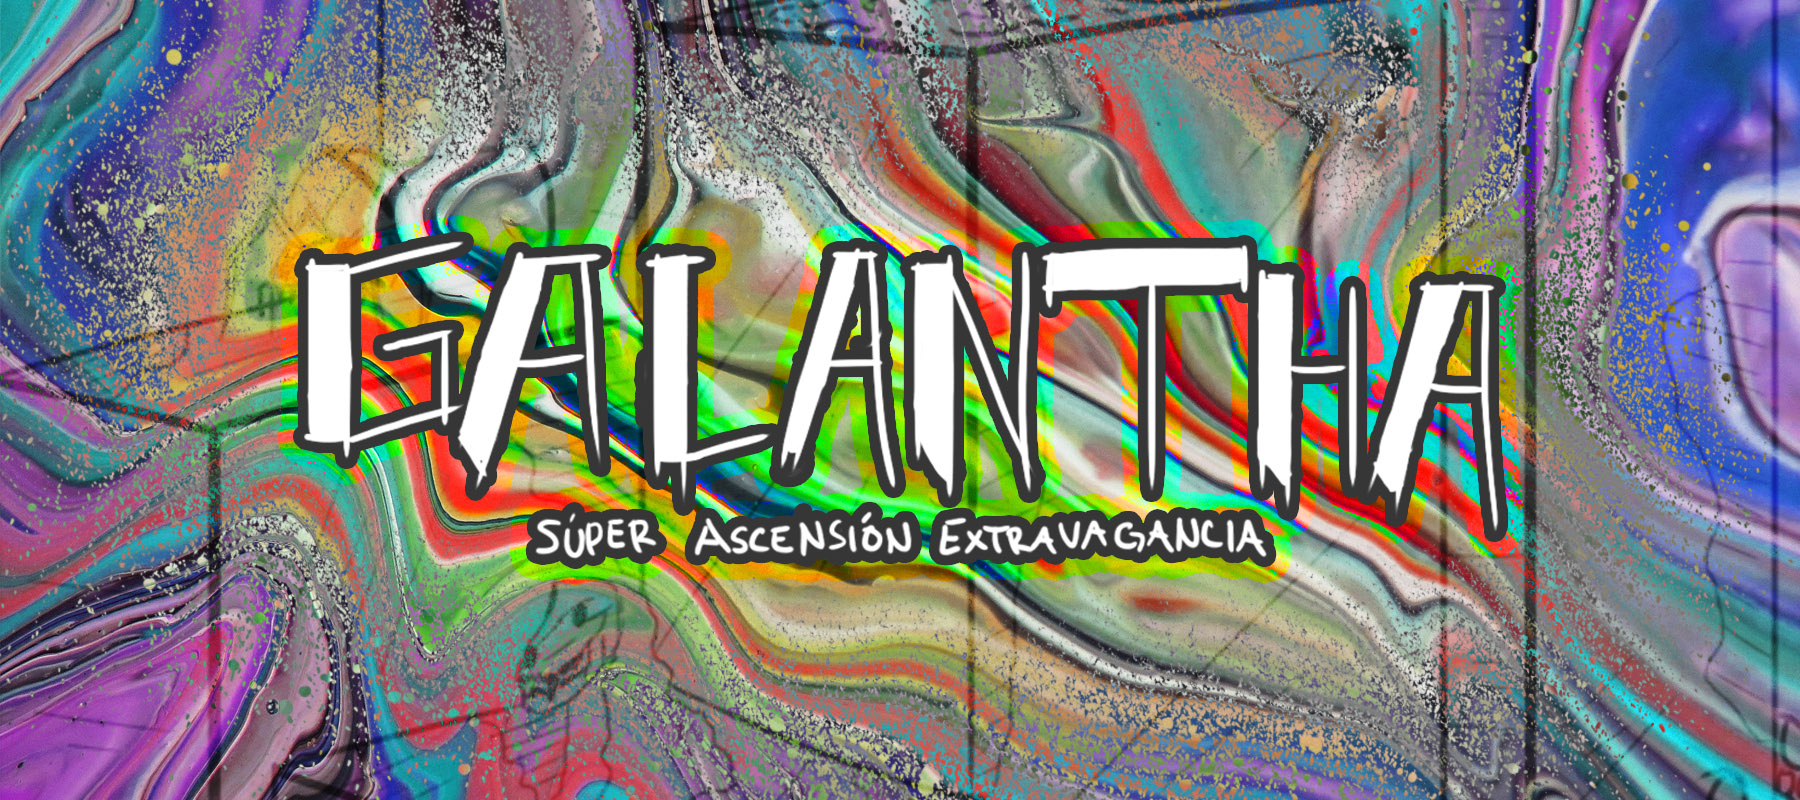 Galantha super ascension extravaganza